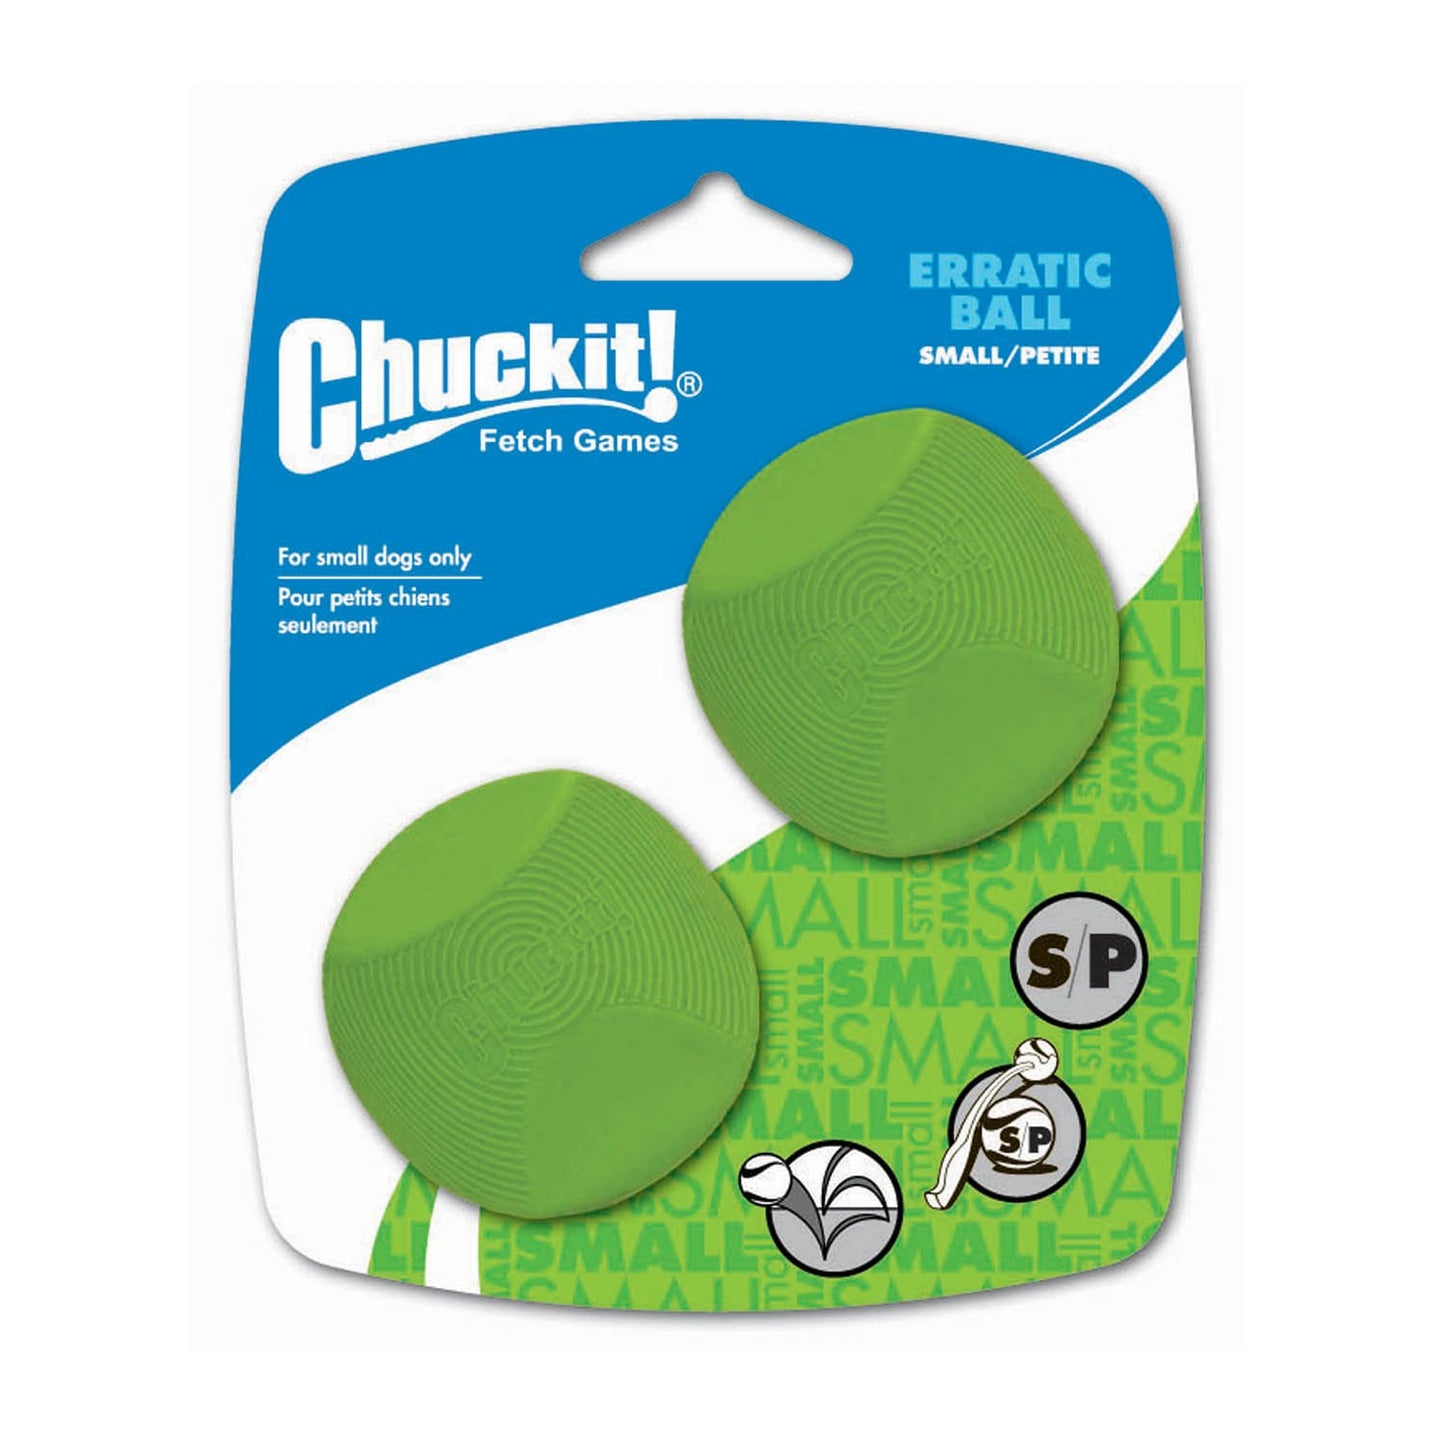 Chuckit Erratic Ball Fetch Ball Toy For Dog 2pk - Small